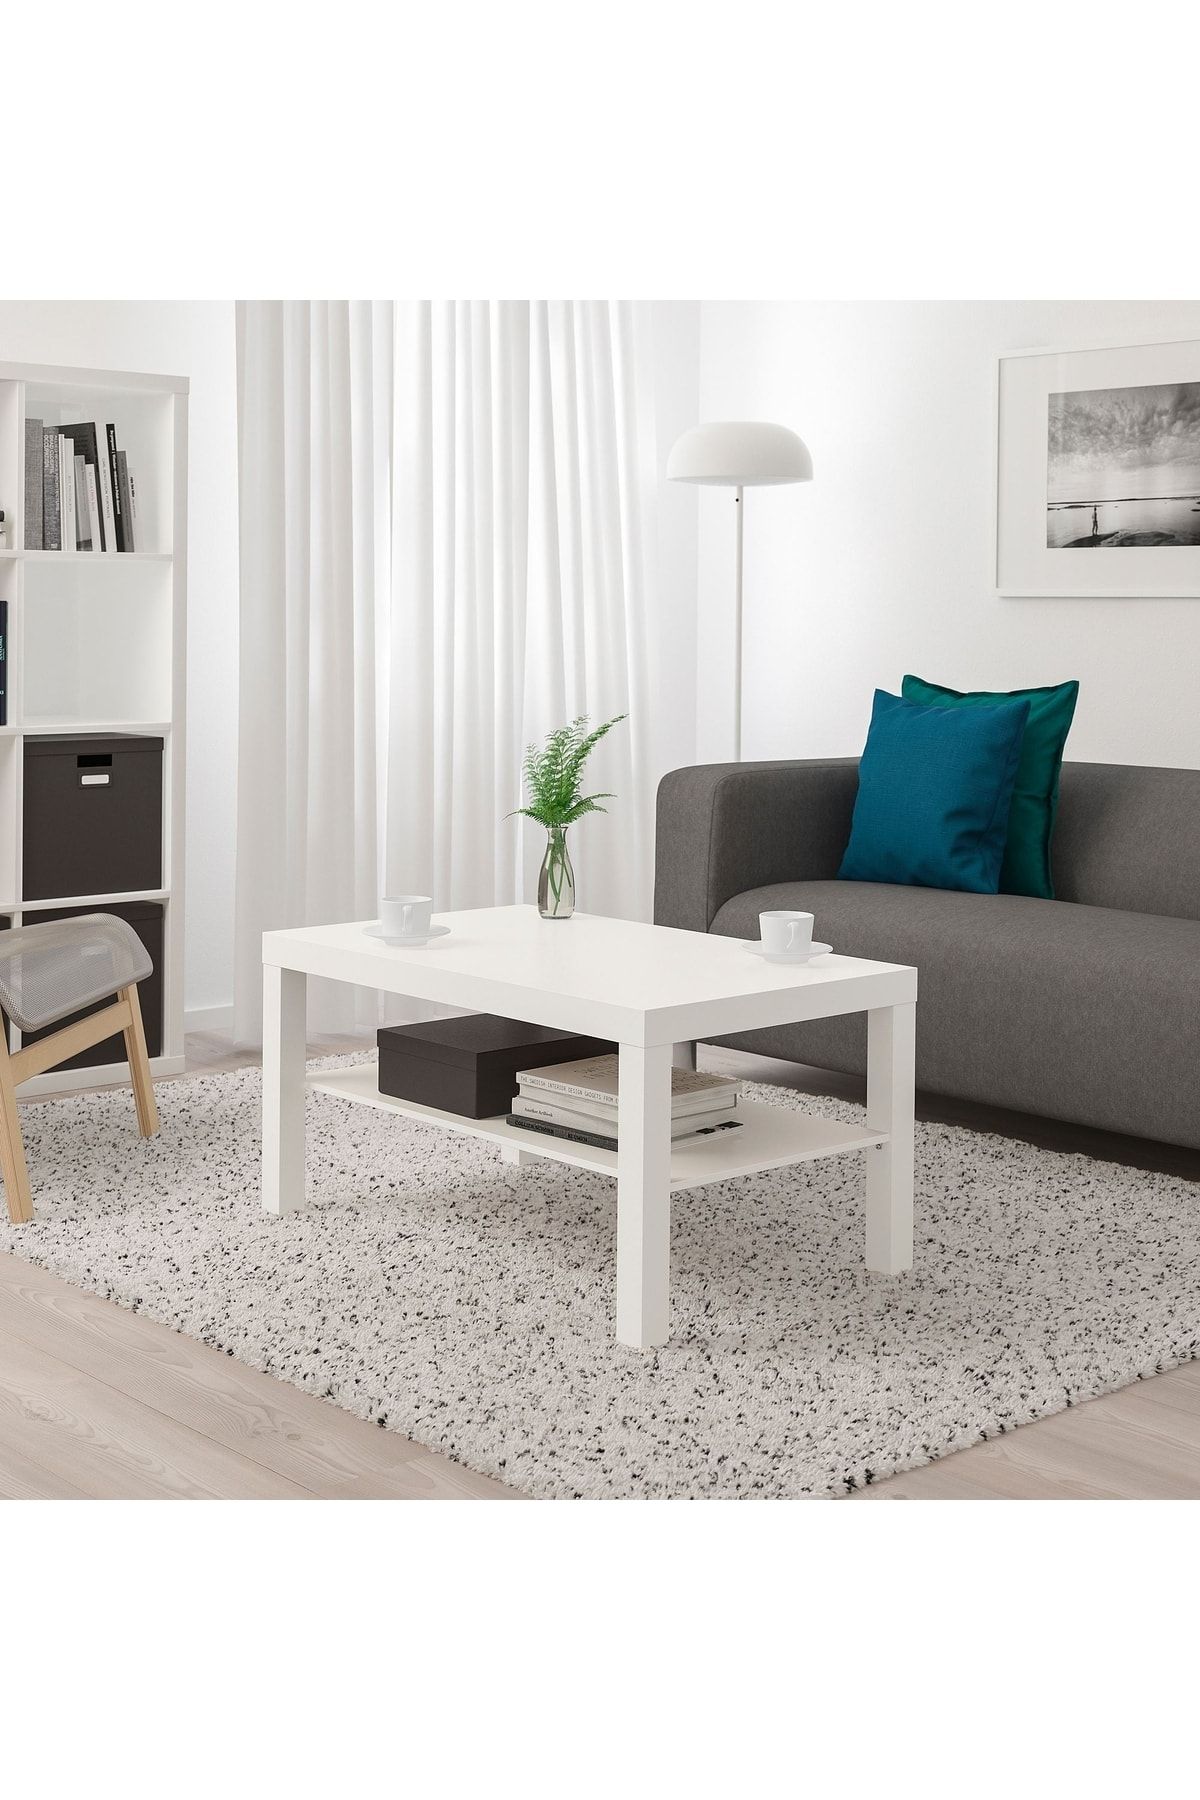 IKEA Dekoratif Lack Orta Sehpa Mobilya Beyaz Renkli - 55x90 Cm